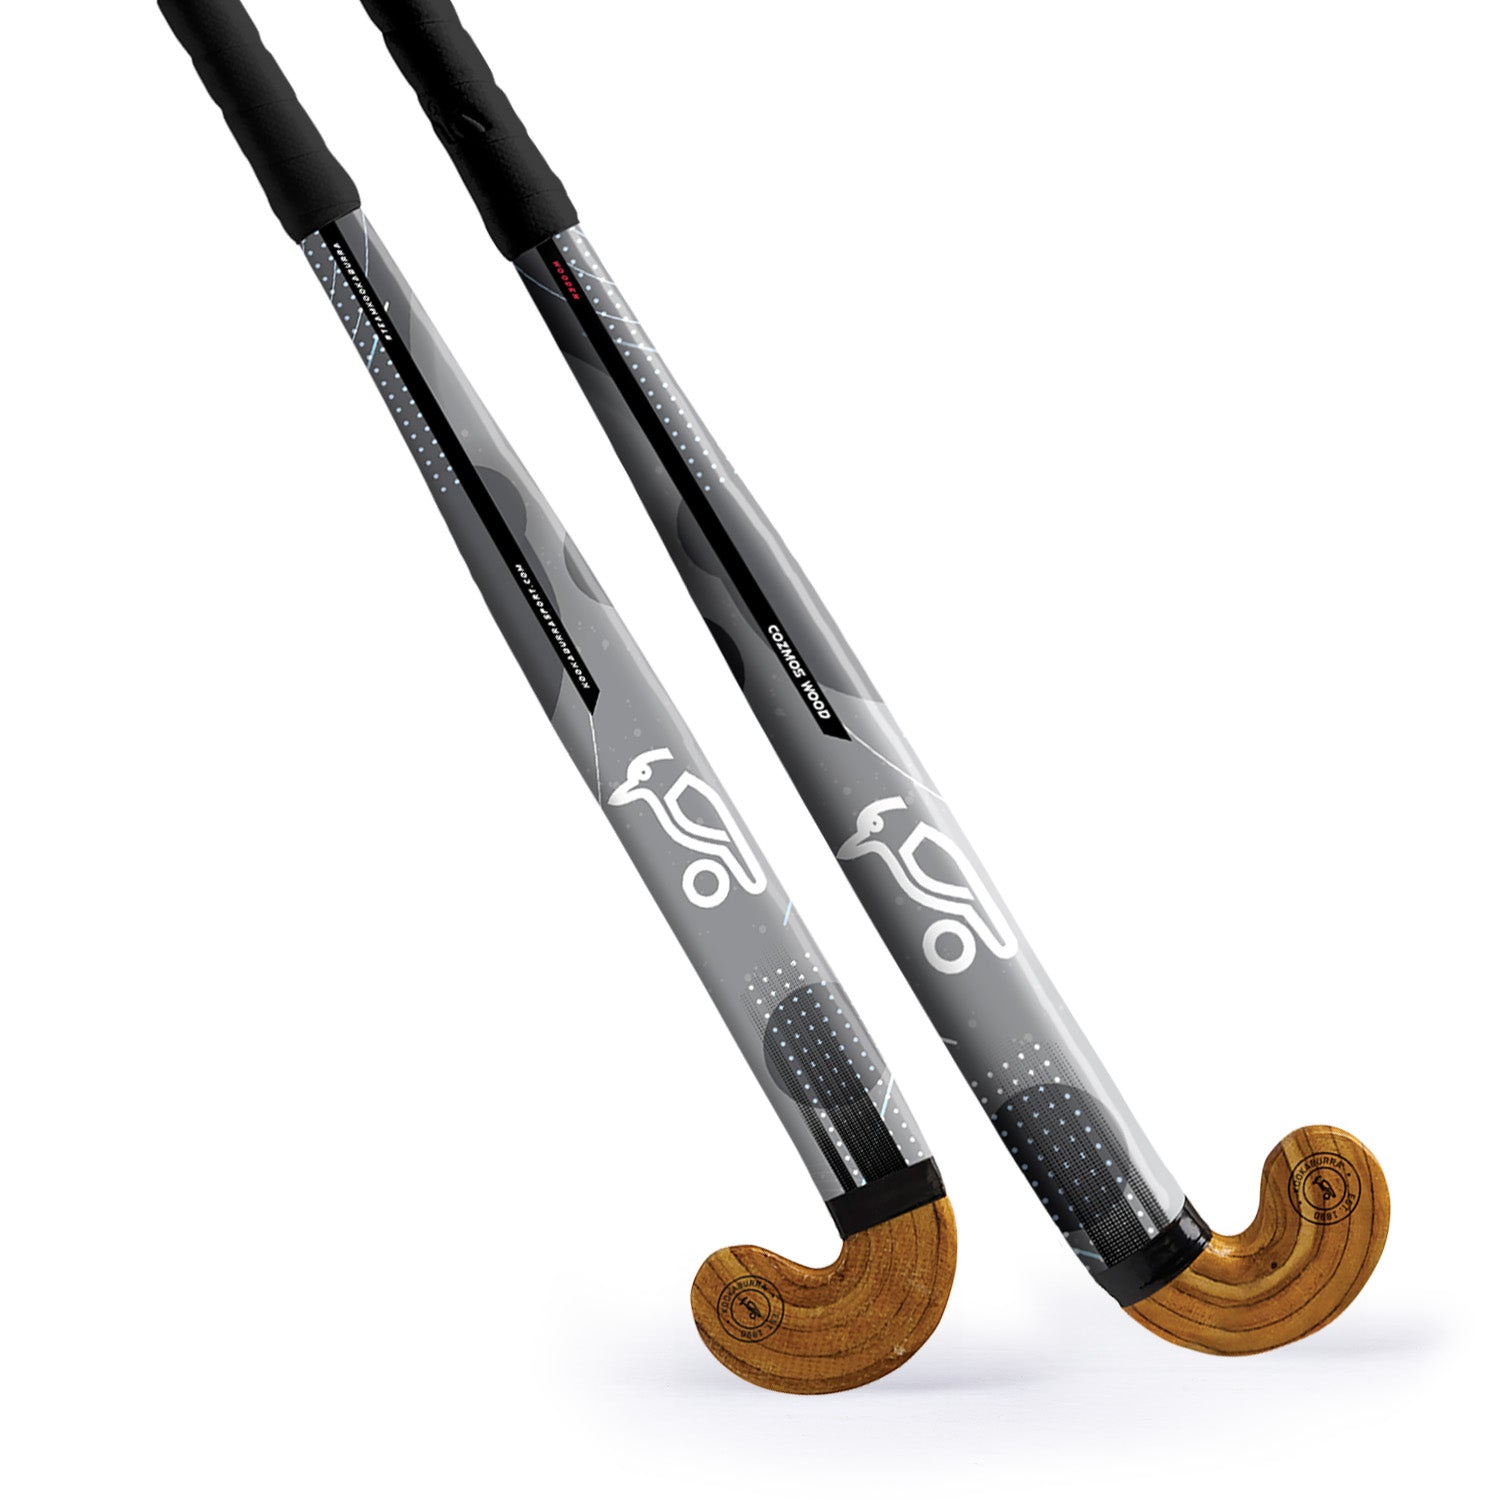 Kookaburra Cozmos Wooden 28 Hockey Stick